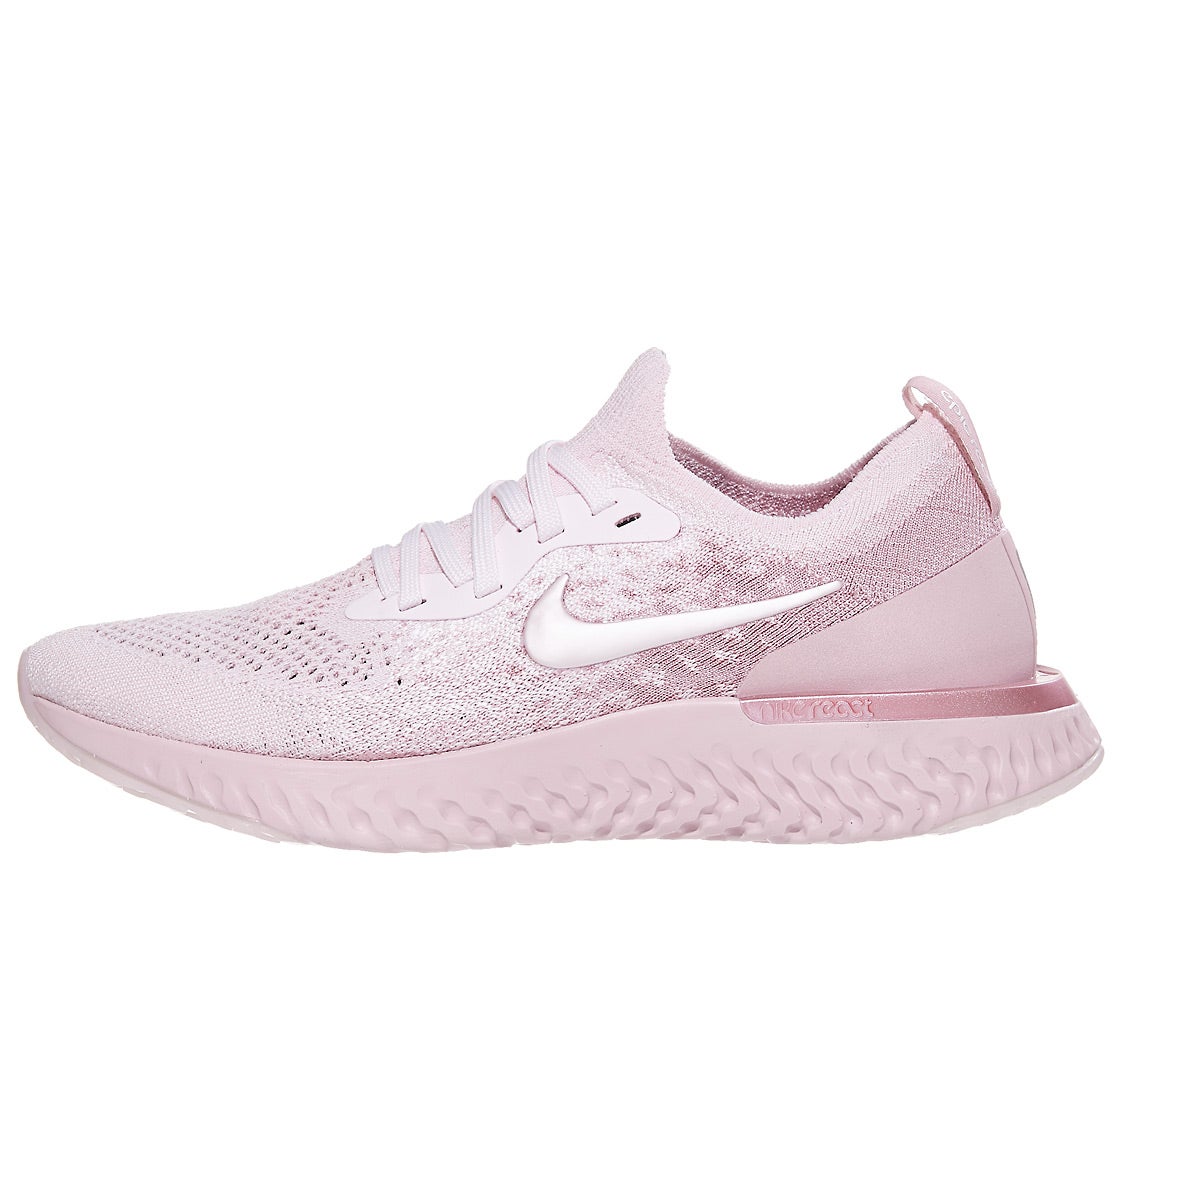 Nike Epic React Flyknit Women's Shoes Pearl Pink/Pin 360° View ...